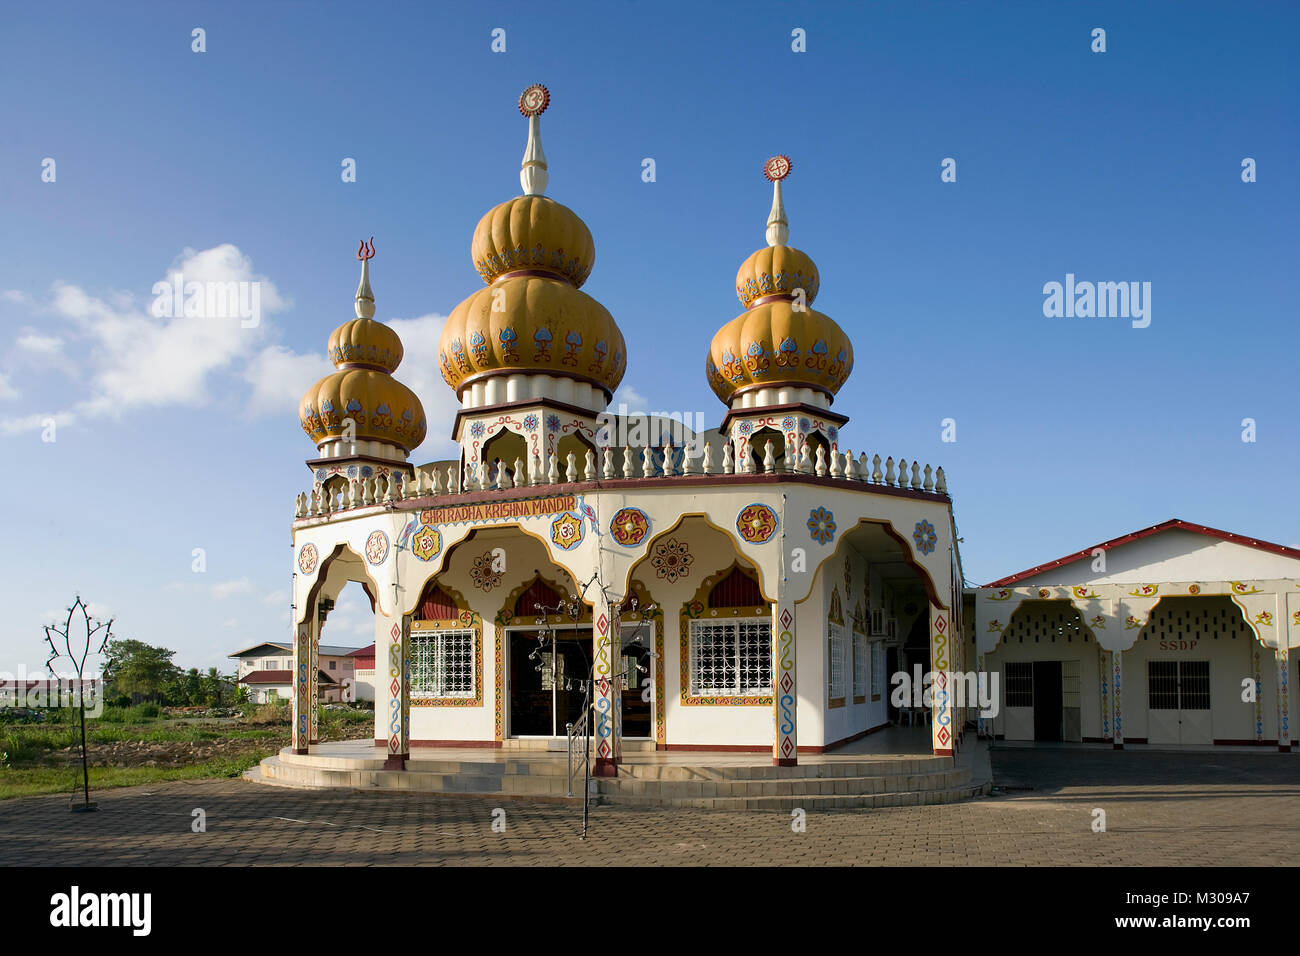 Surinam, Paramaribo, un templo hindú o mandir. Foto de stock